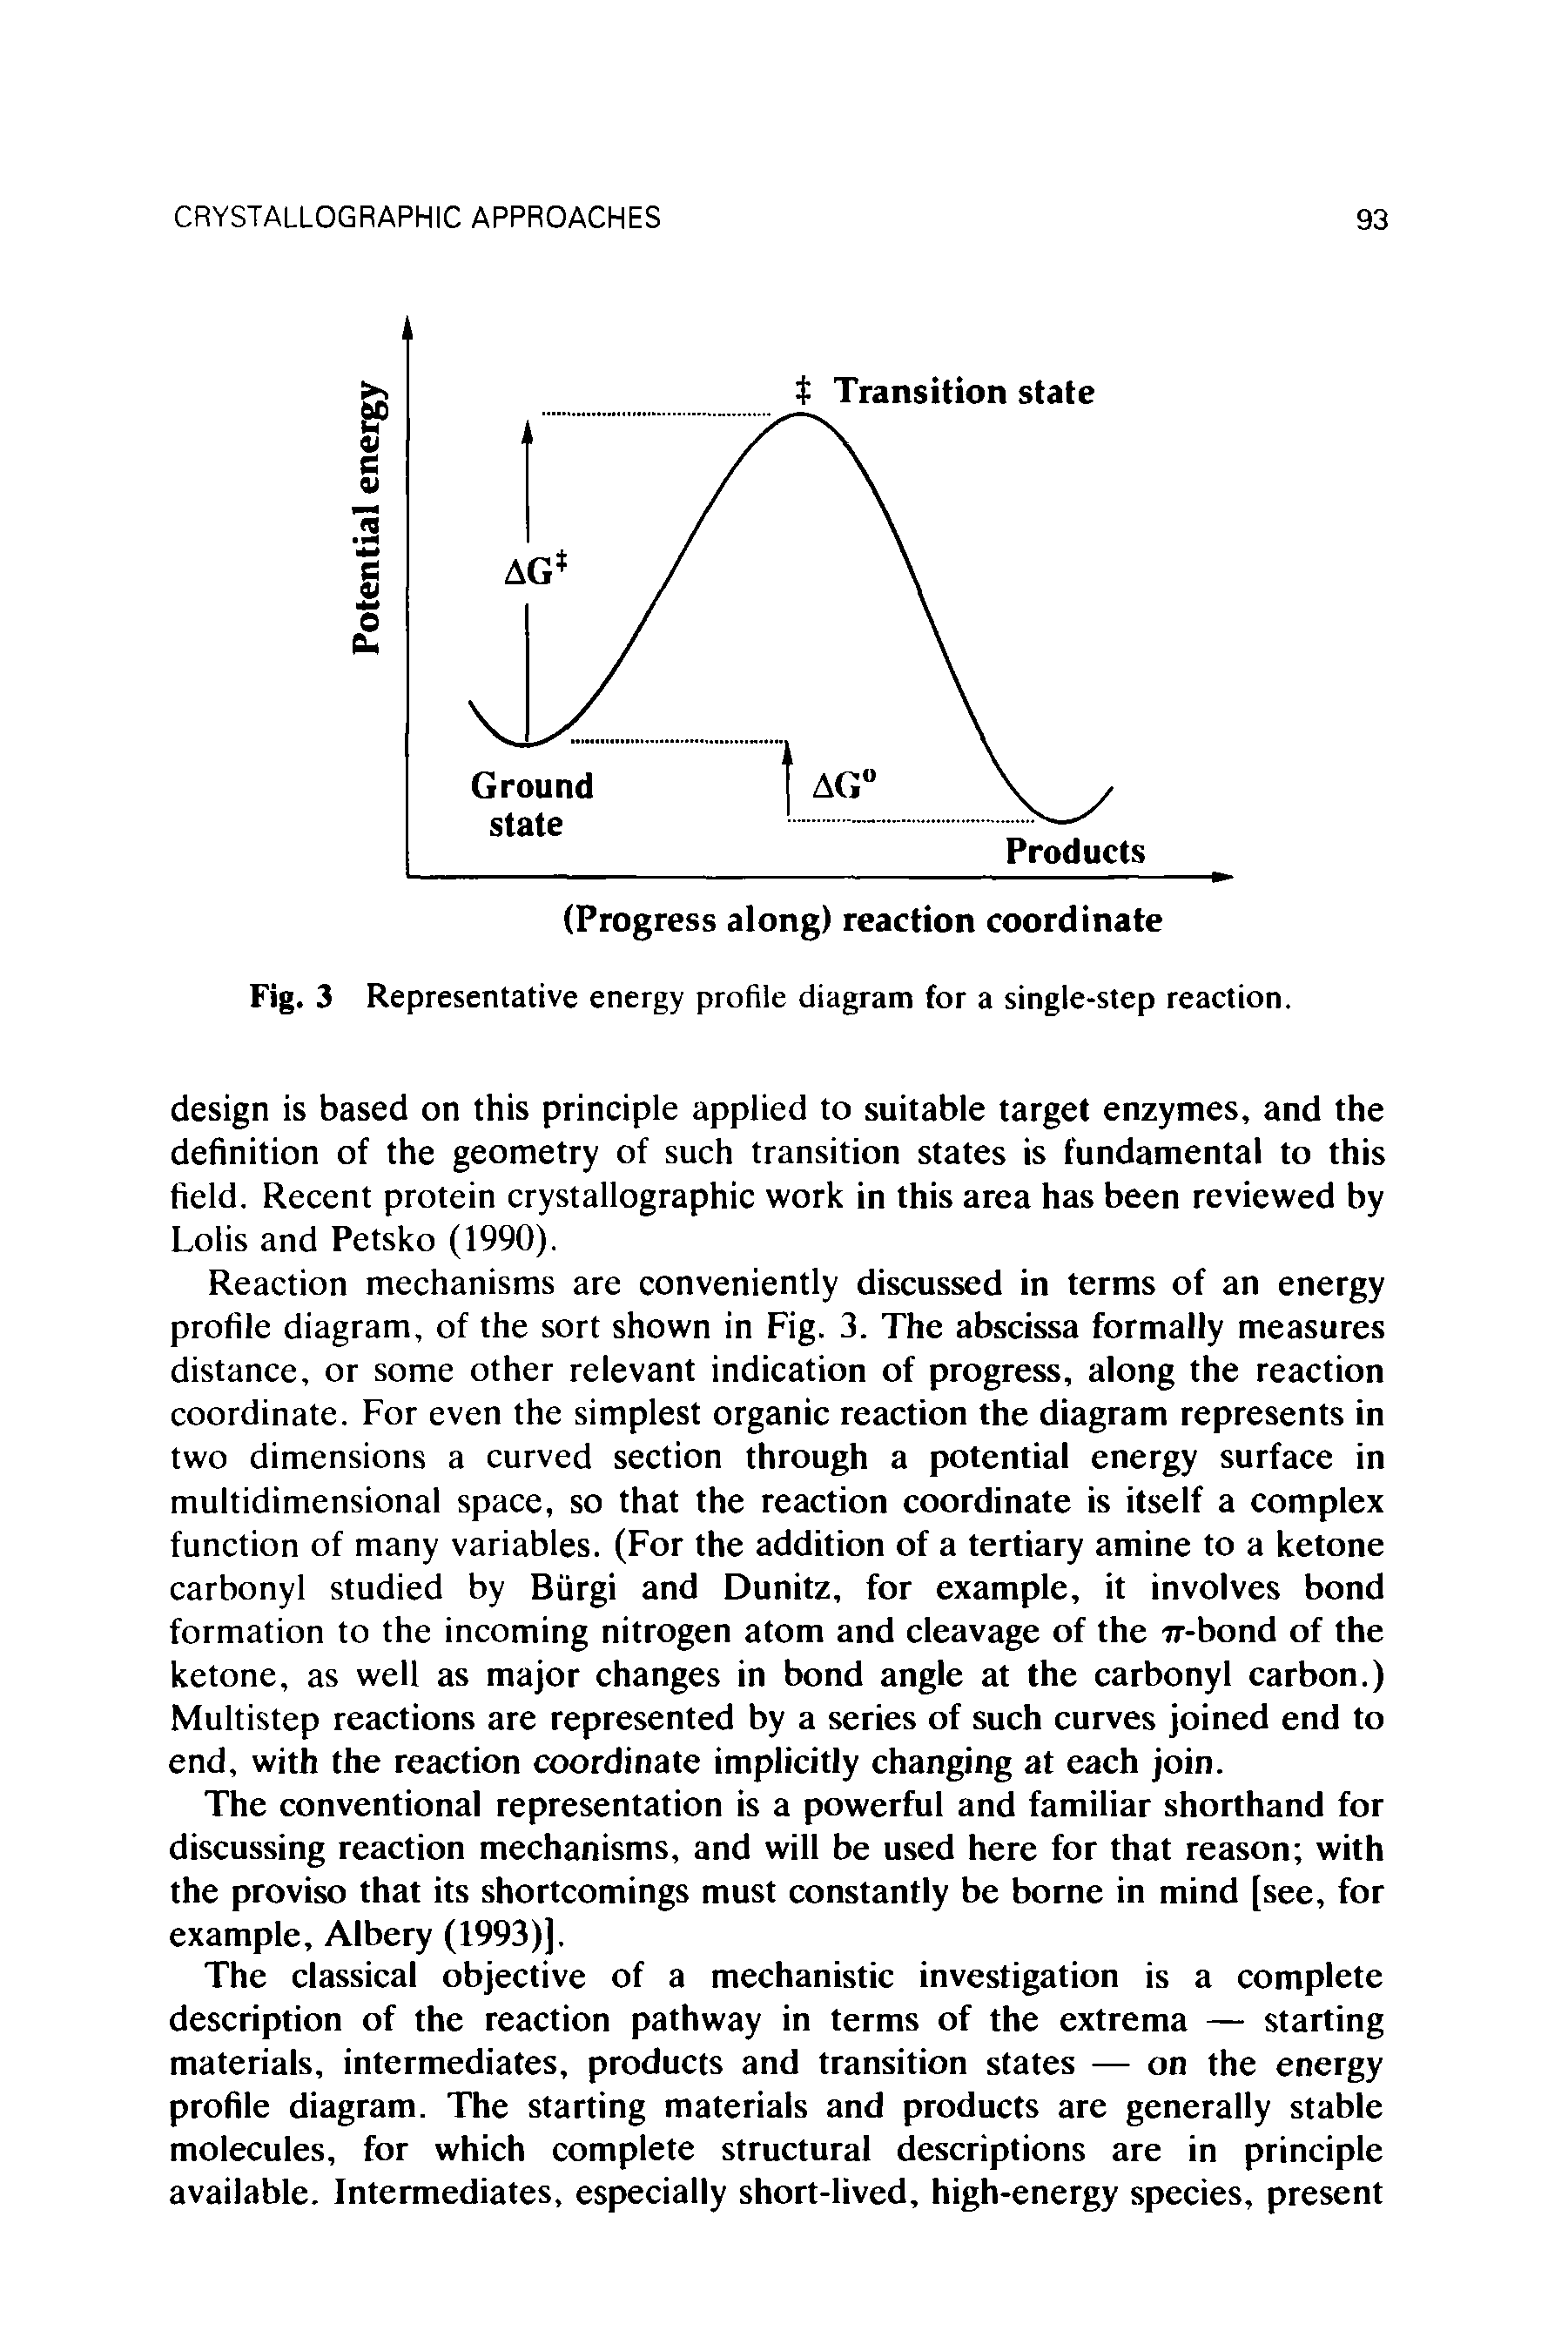 Fig. 3 Representative energy profile diagram for a single-step reaction.